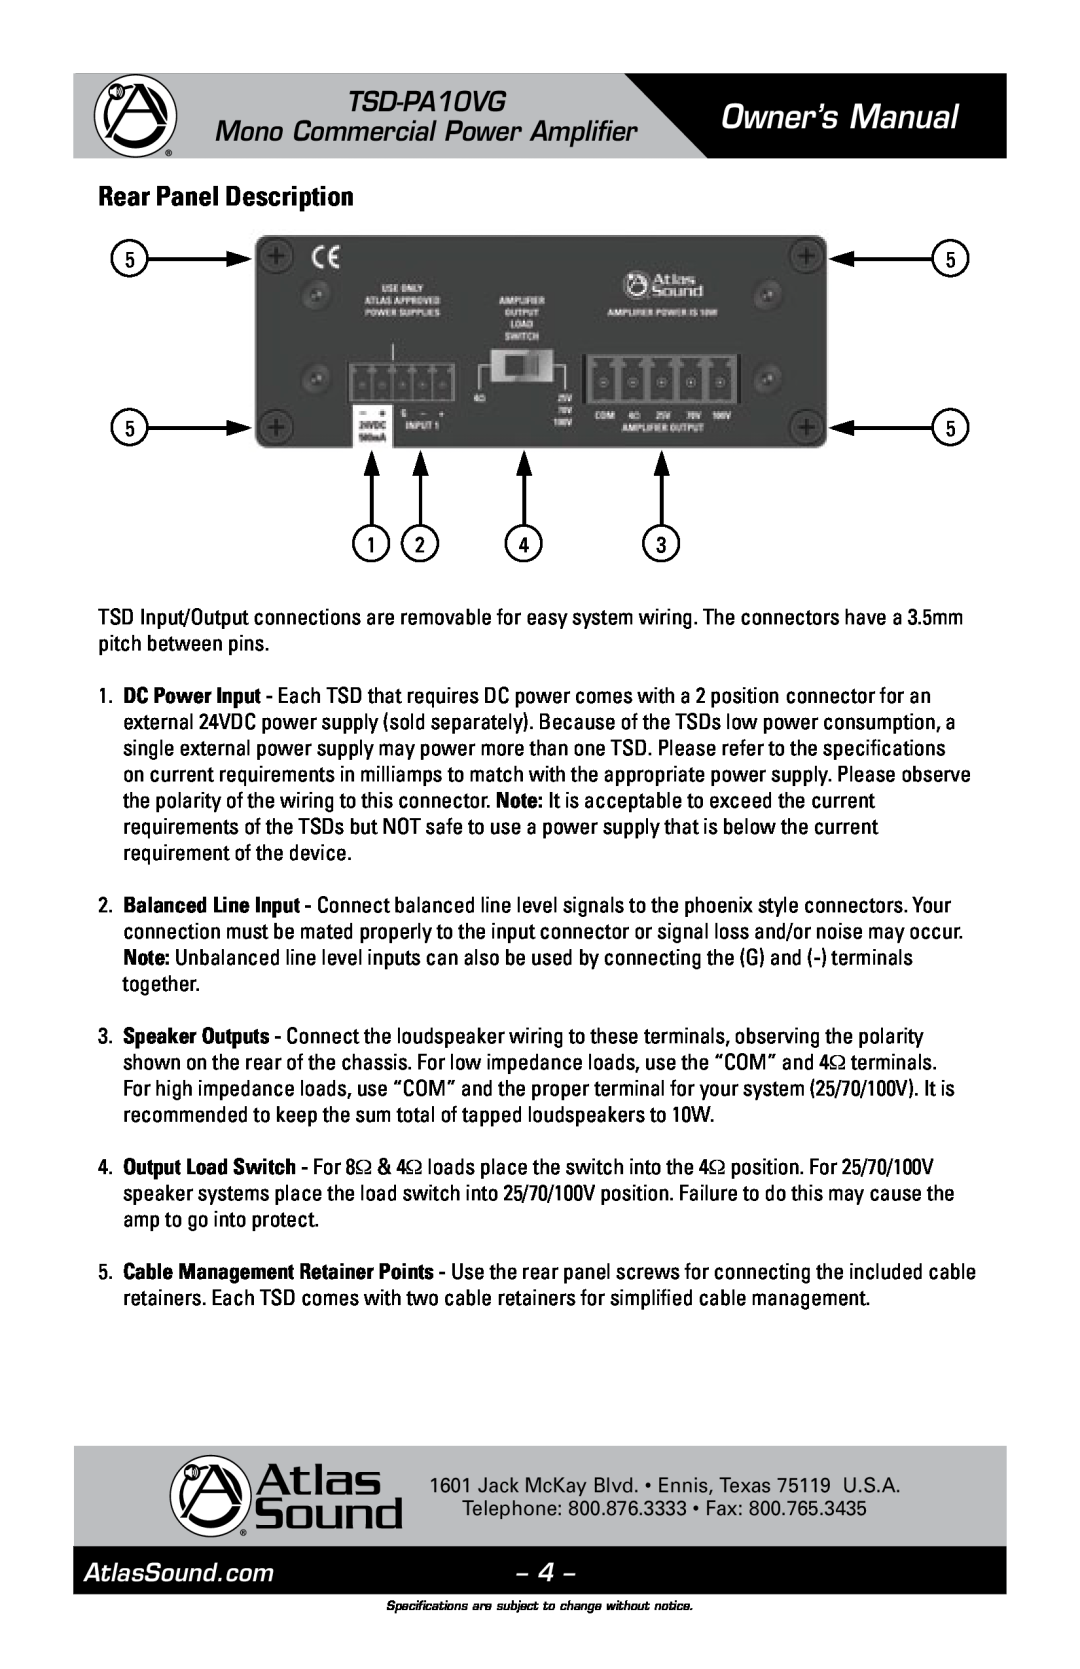 Atlas Sound owner manual Rear Panel Description, TSD-PA10VG Mono Commercial Power Amplifier 